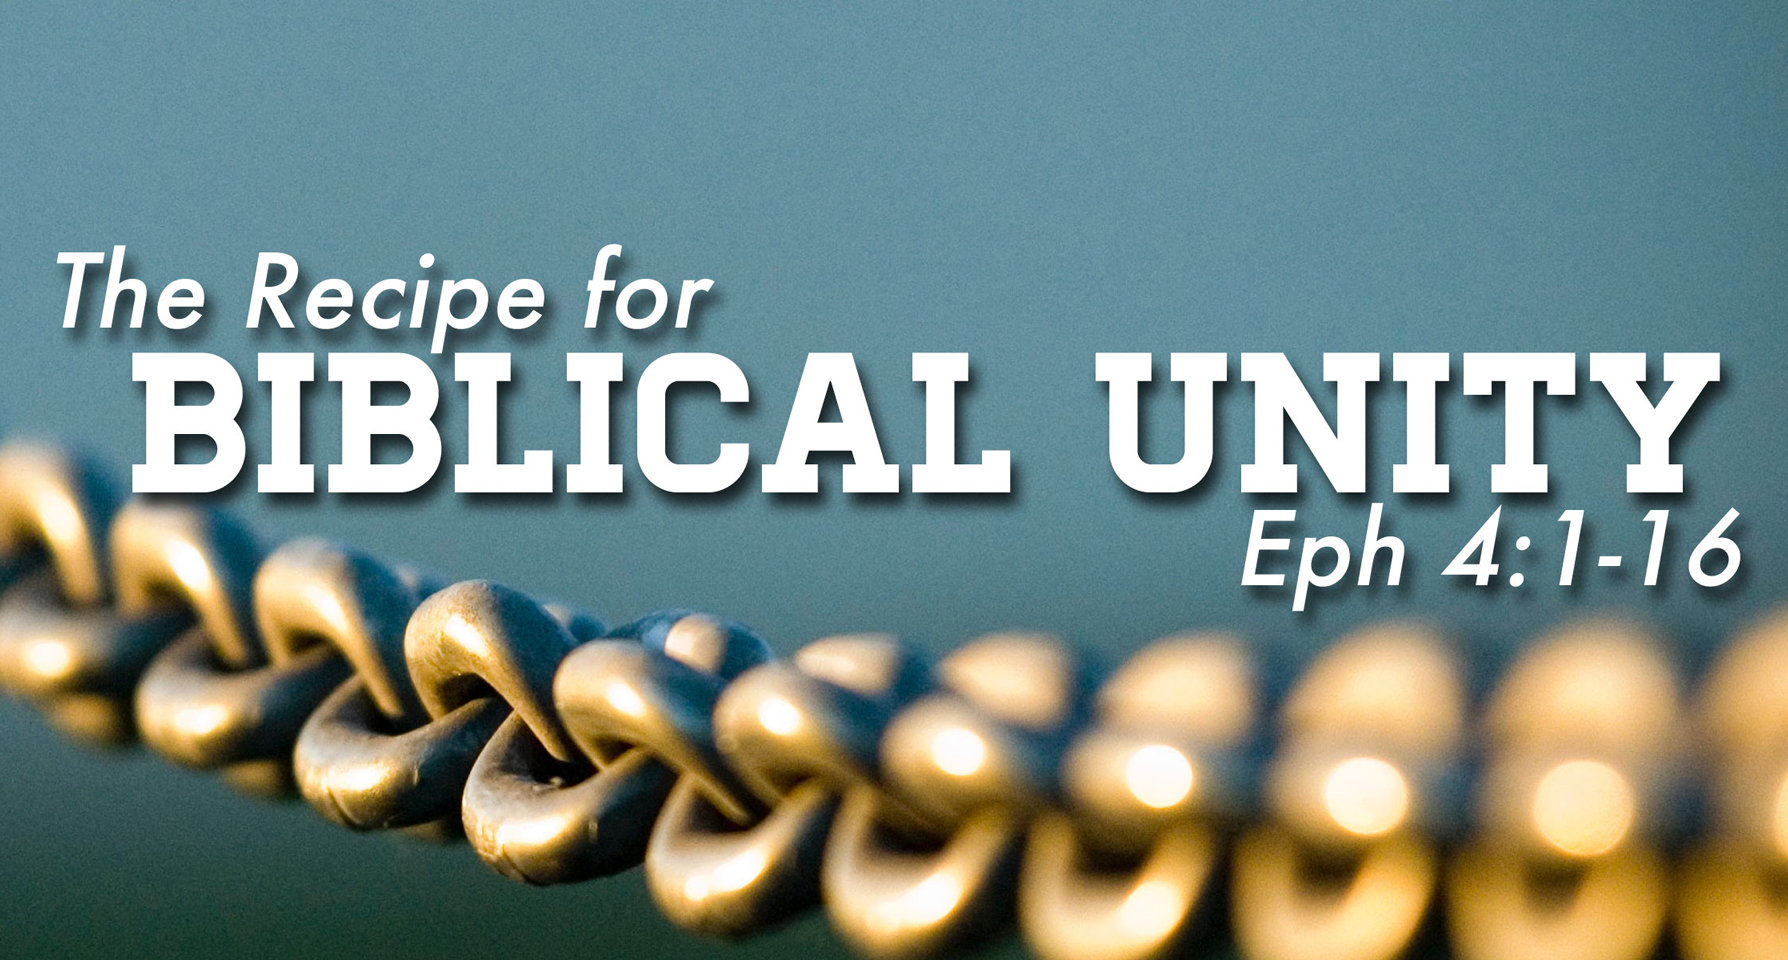 Audio Blog: The Recipe for Biblical Unity